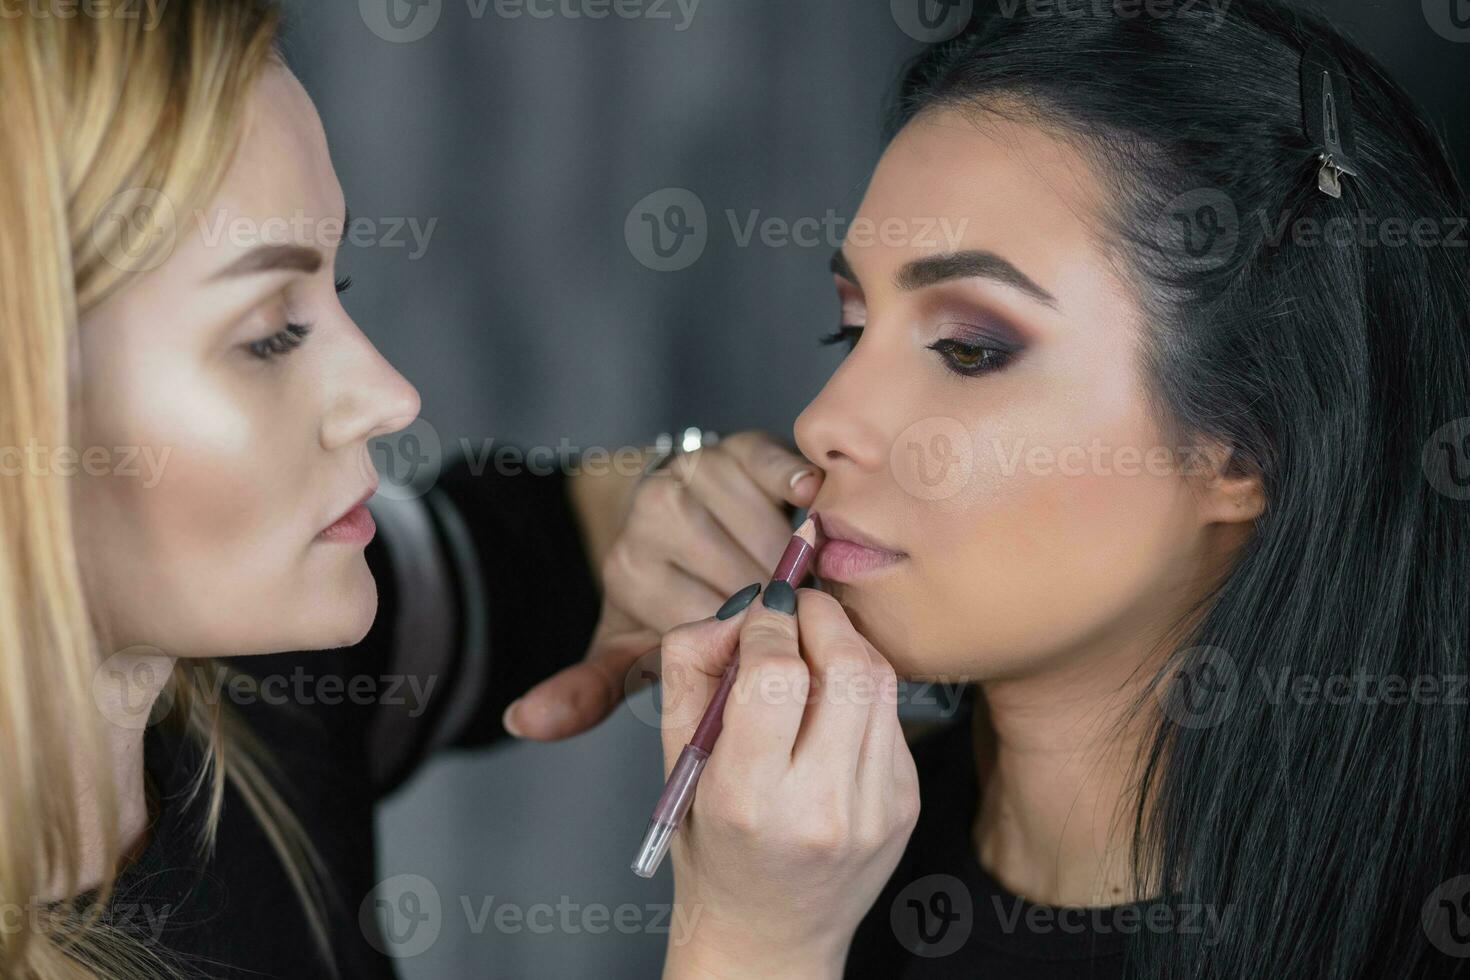 Makeup artist puts a makeup on a young lady photo